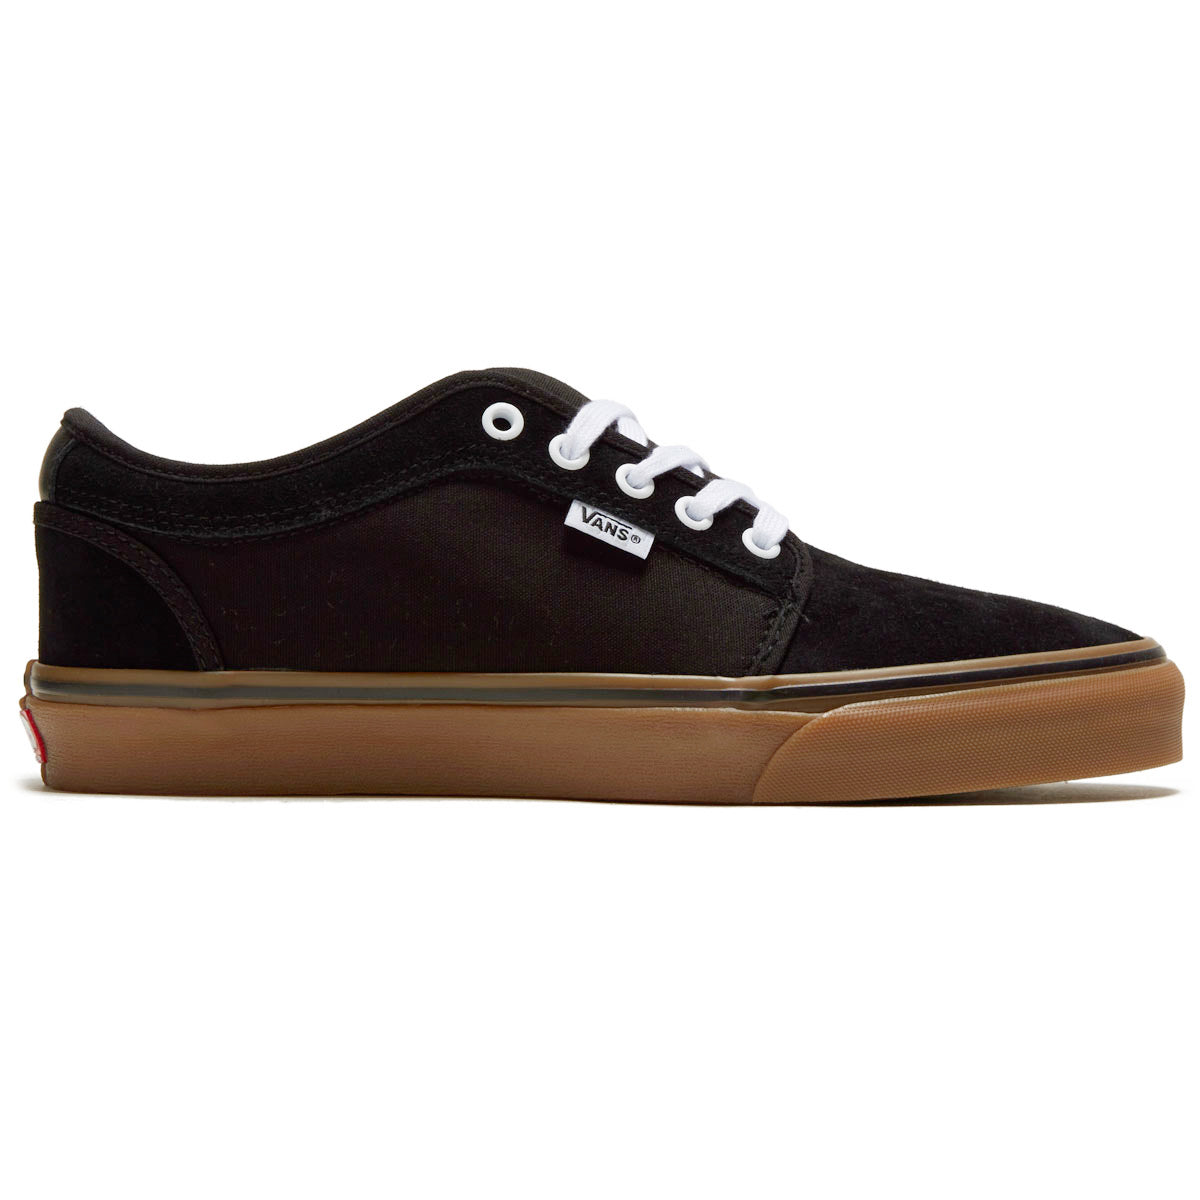 Vans Skate Chukka Low Shoes - Black/Black/Gum image 1